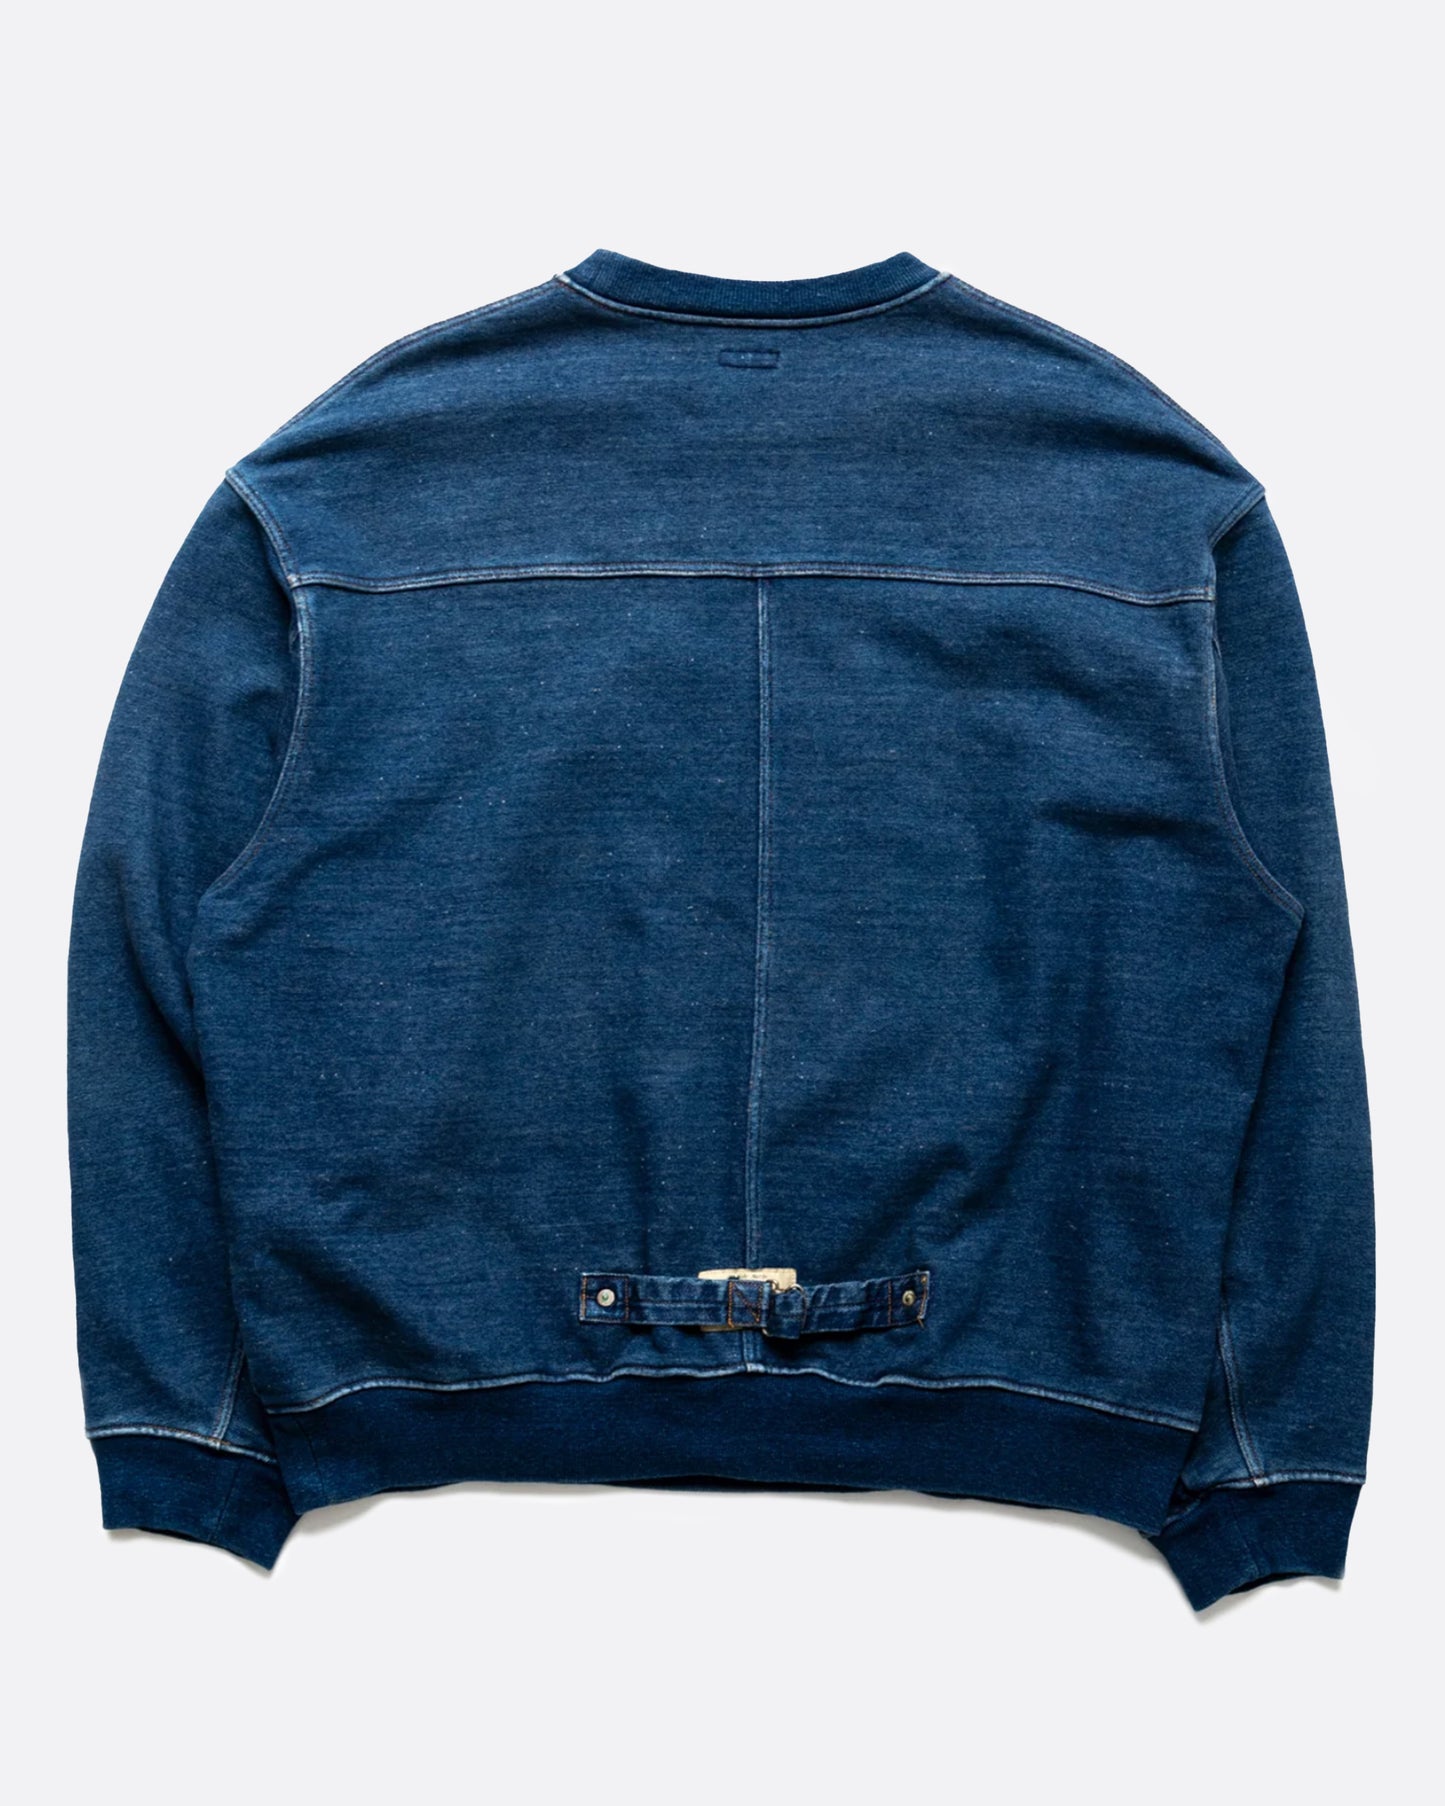 A loose fitting, indigo fleece sweatshirt with a T-shaped split back and cinch.